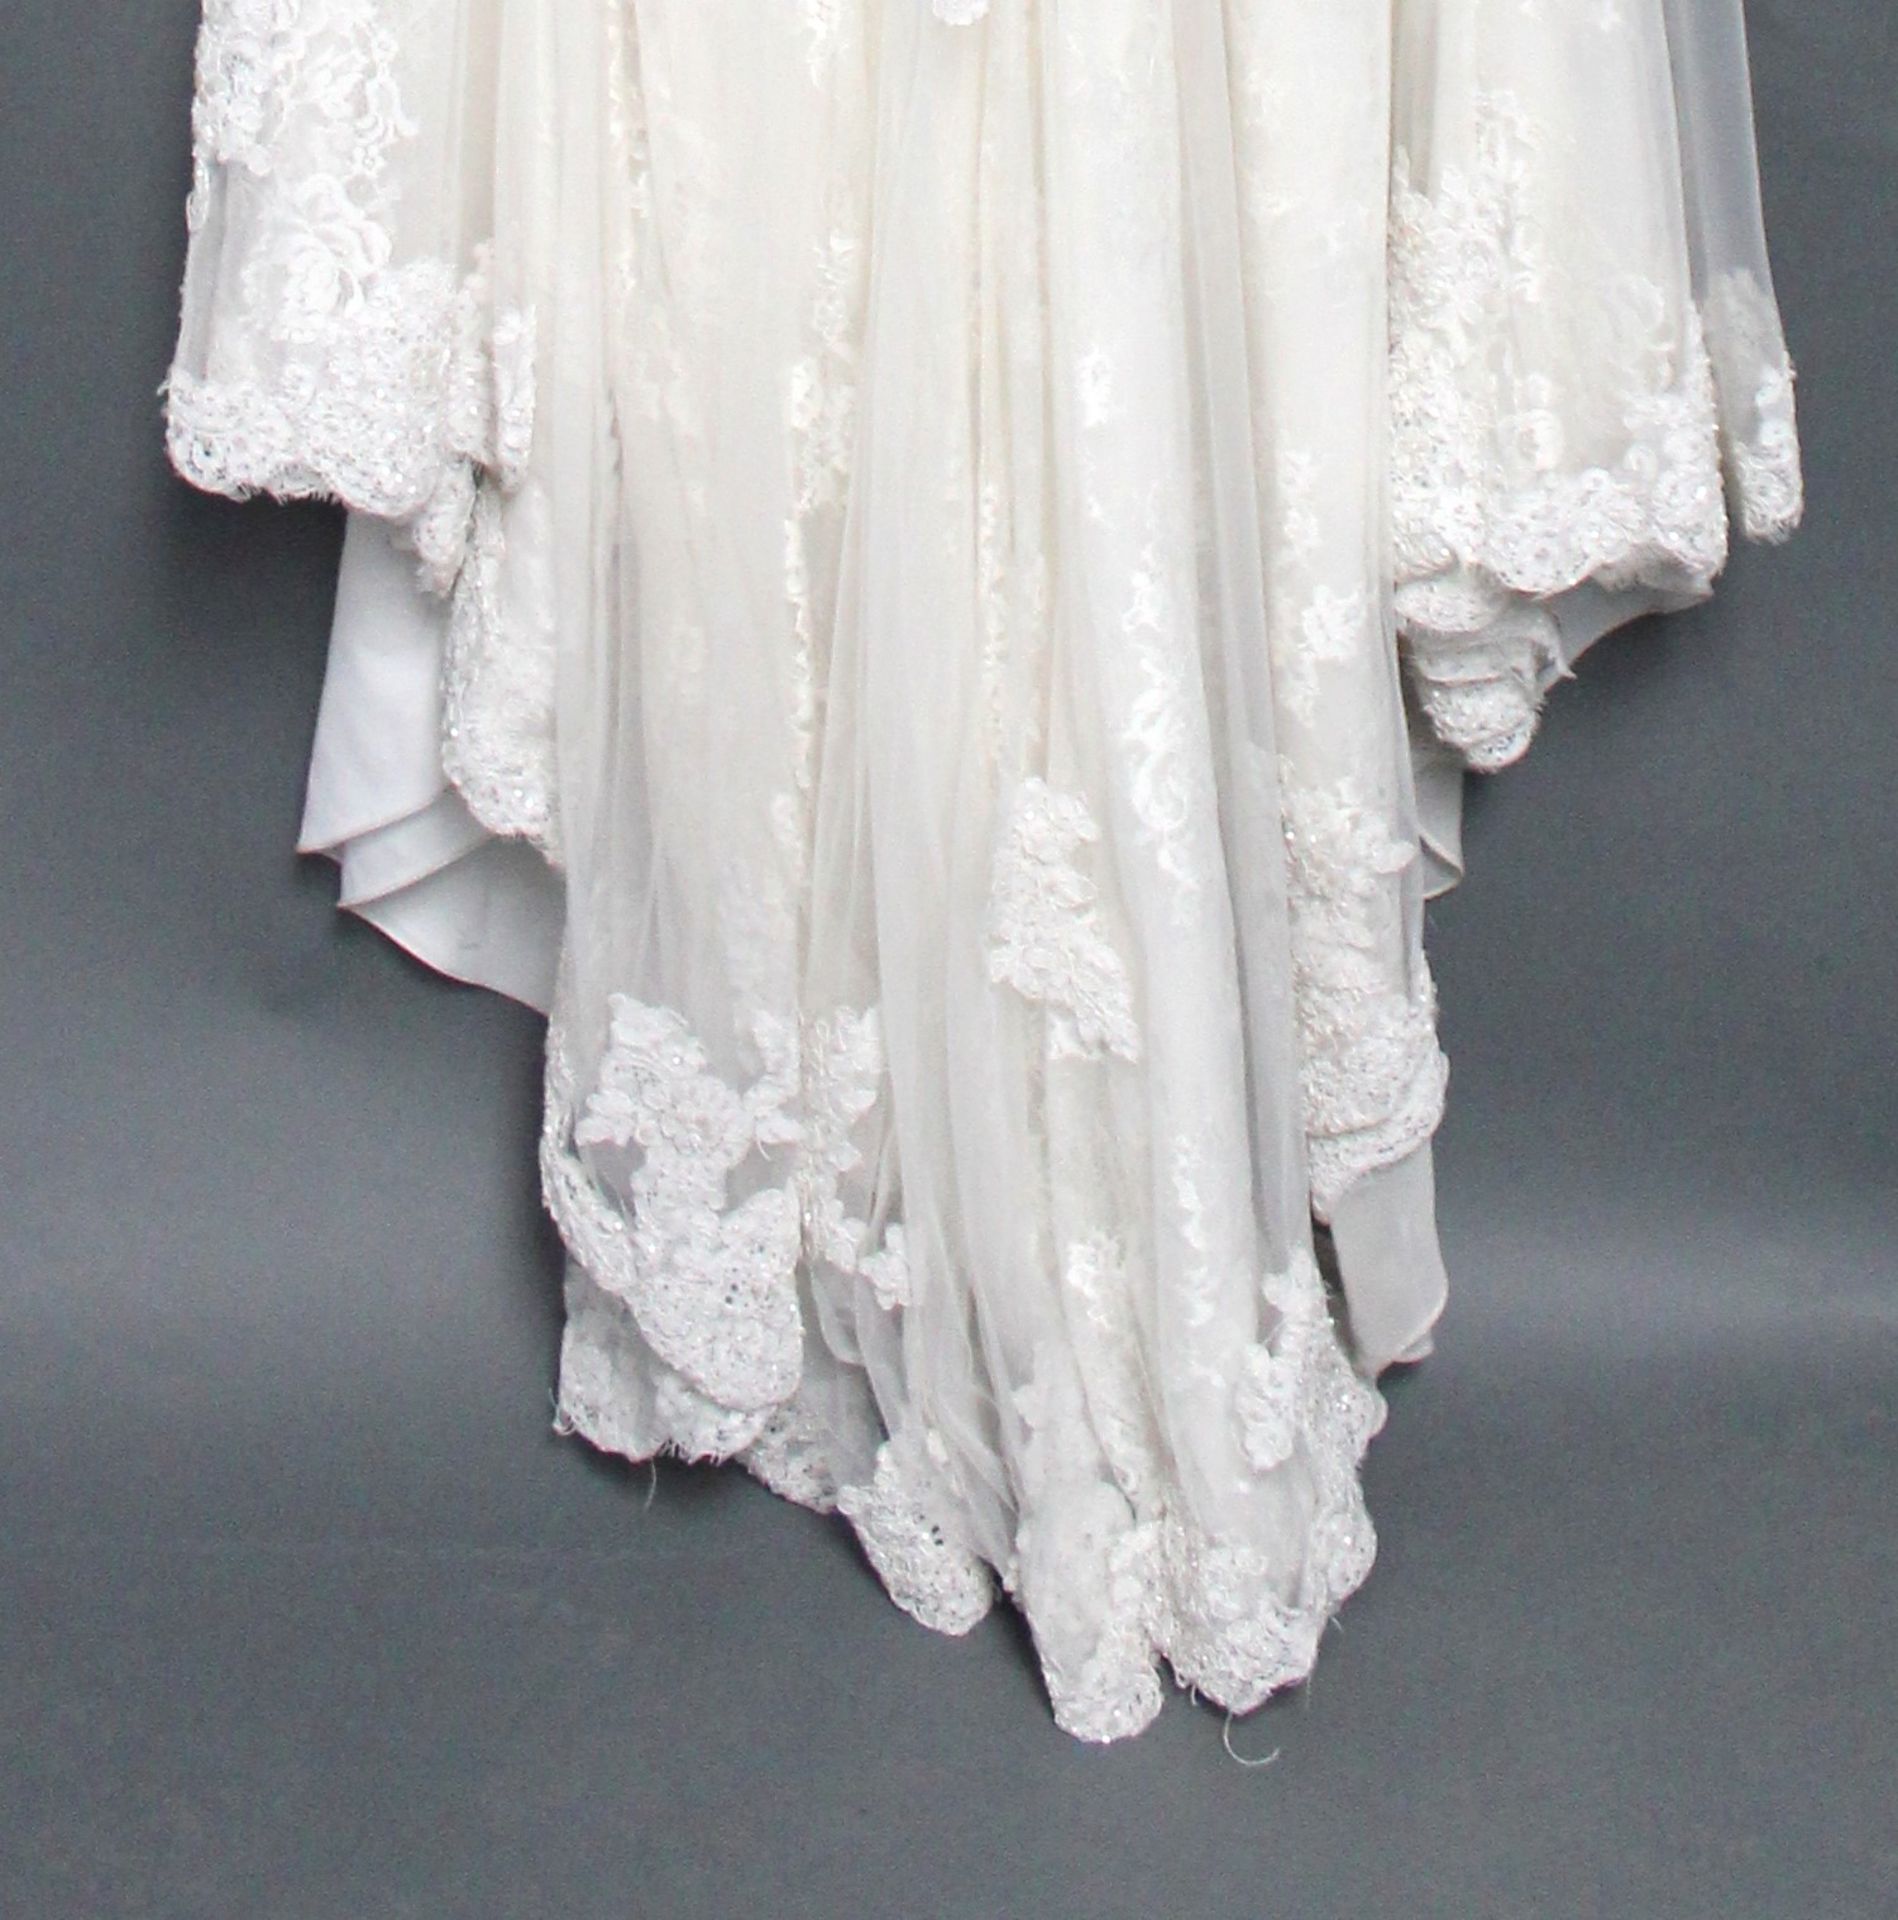 1 x LUSAN MANDONGUS/ ANNASUL Y Lace Overlay Full Skirt Designer Wedding Dress RRP £1,500 UK14 - Image 5 of 7